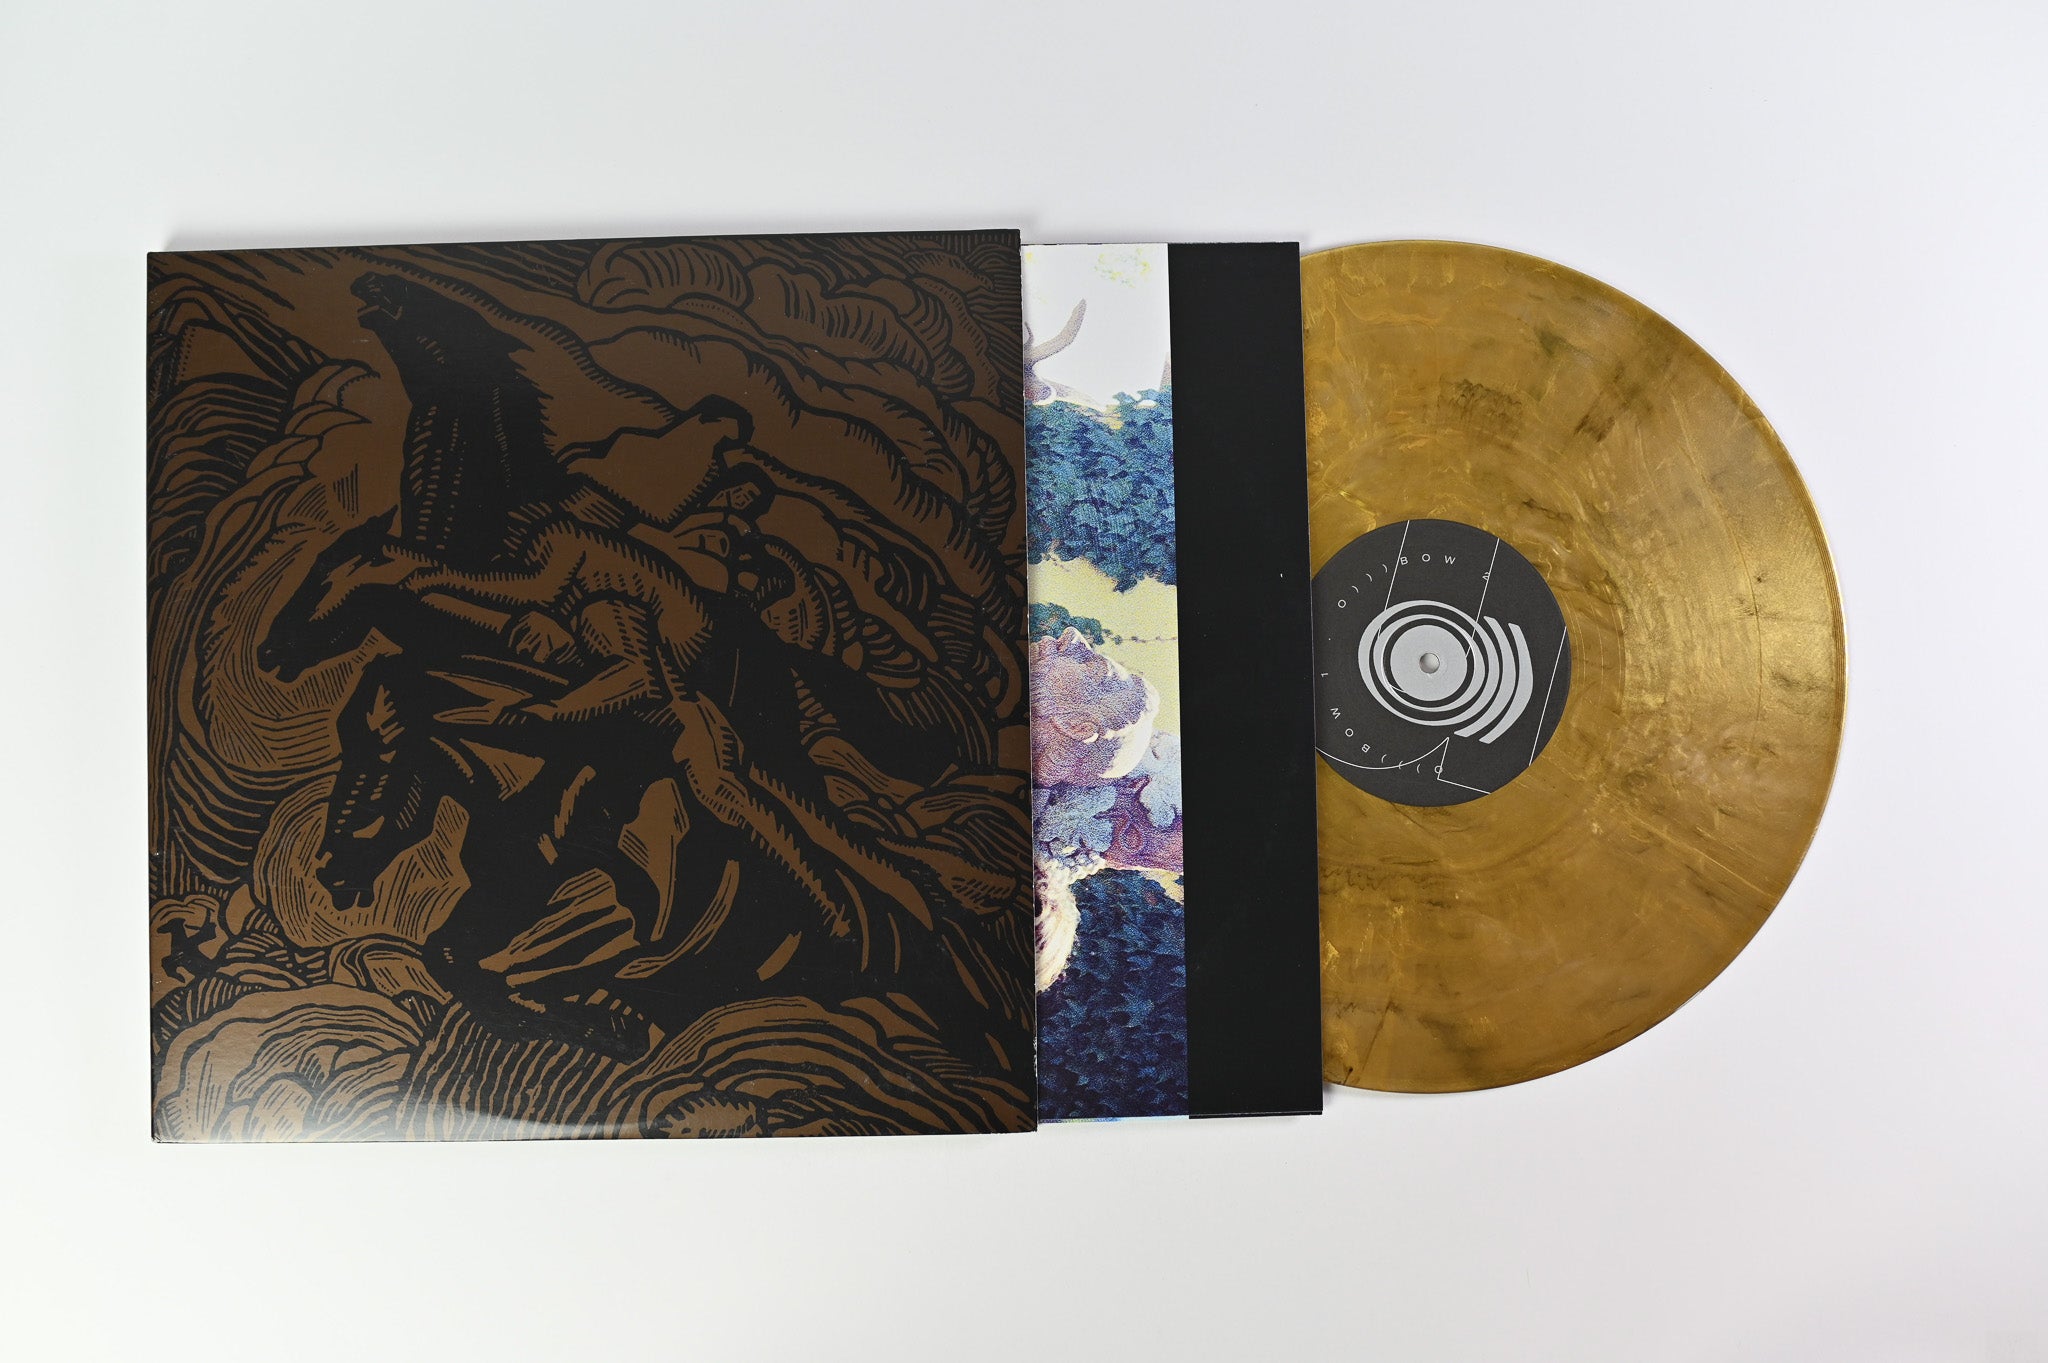 Sunn O))) - 3: Flight Of The Behemoth on Southern Lord Ltd Gold Vinyl Reissue